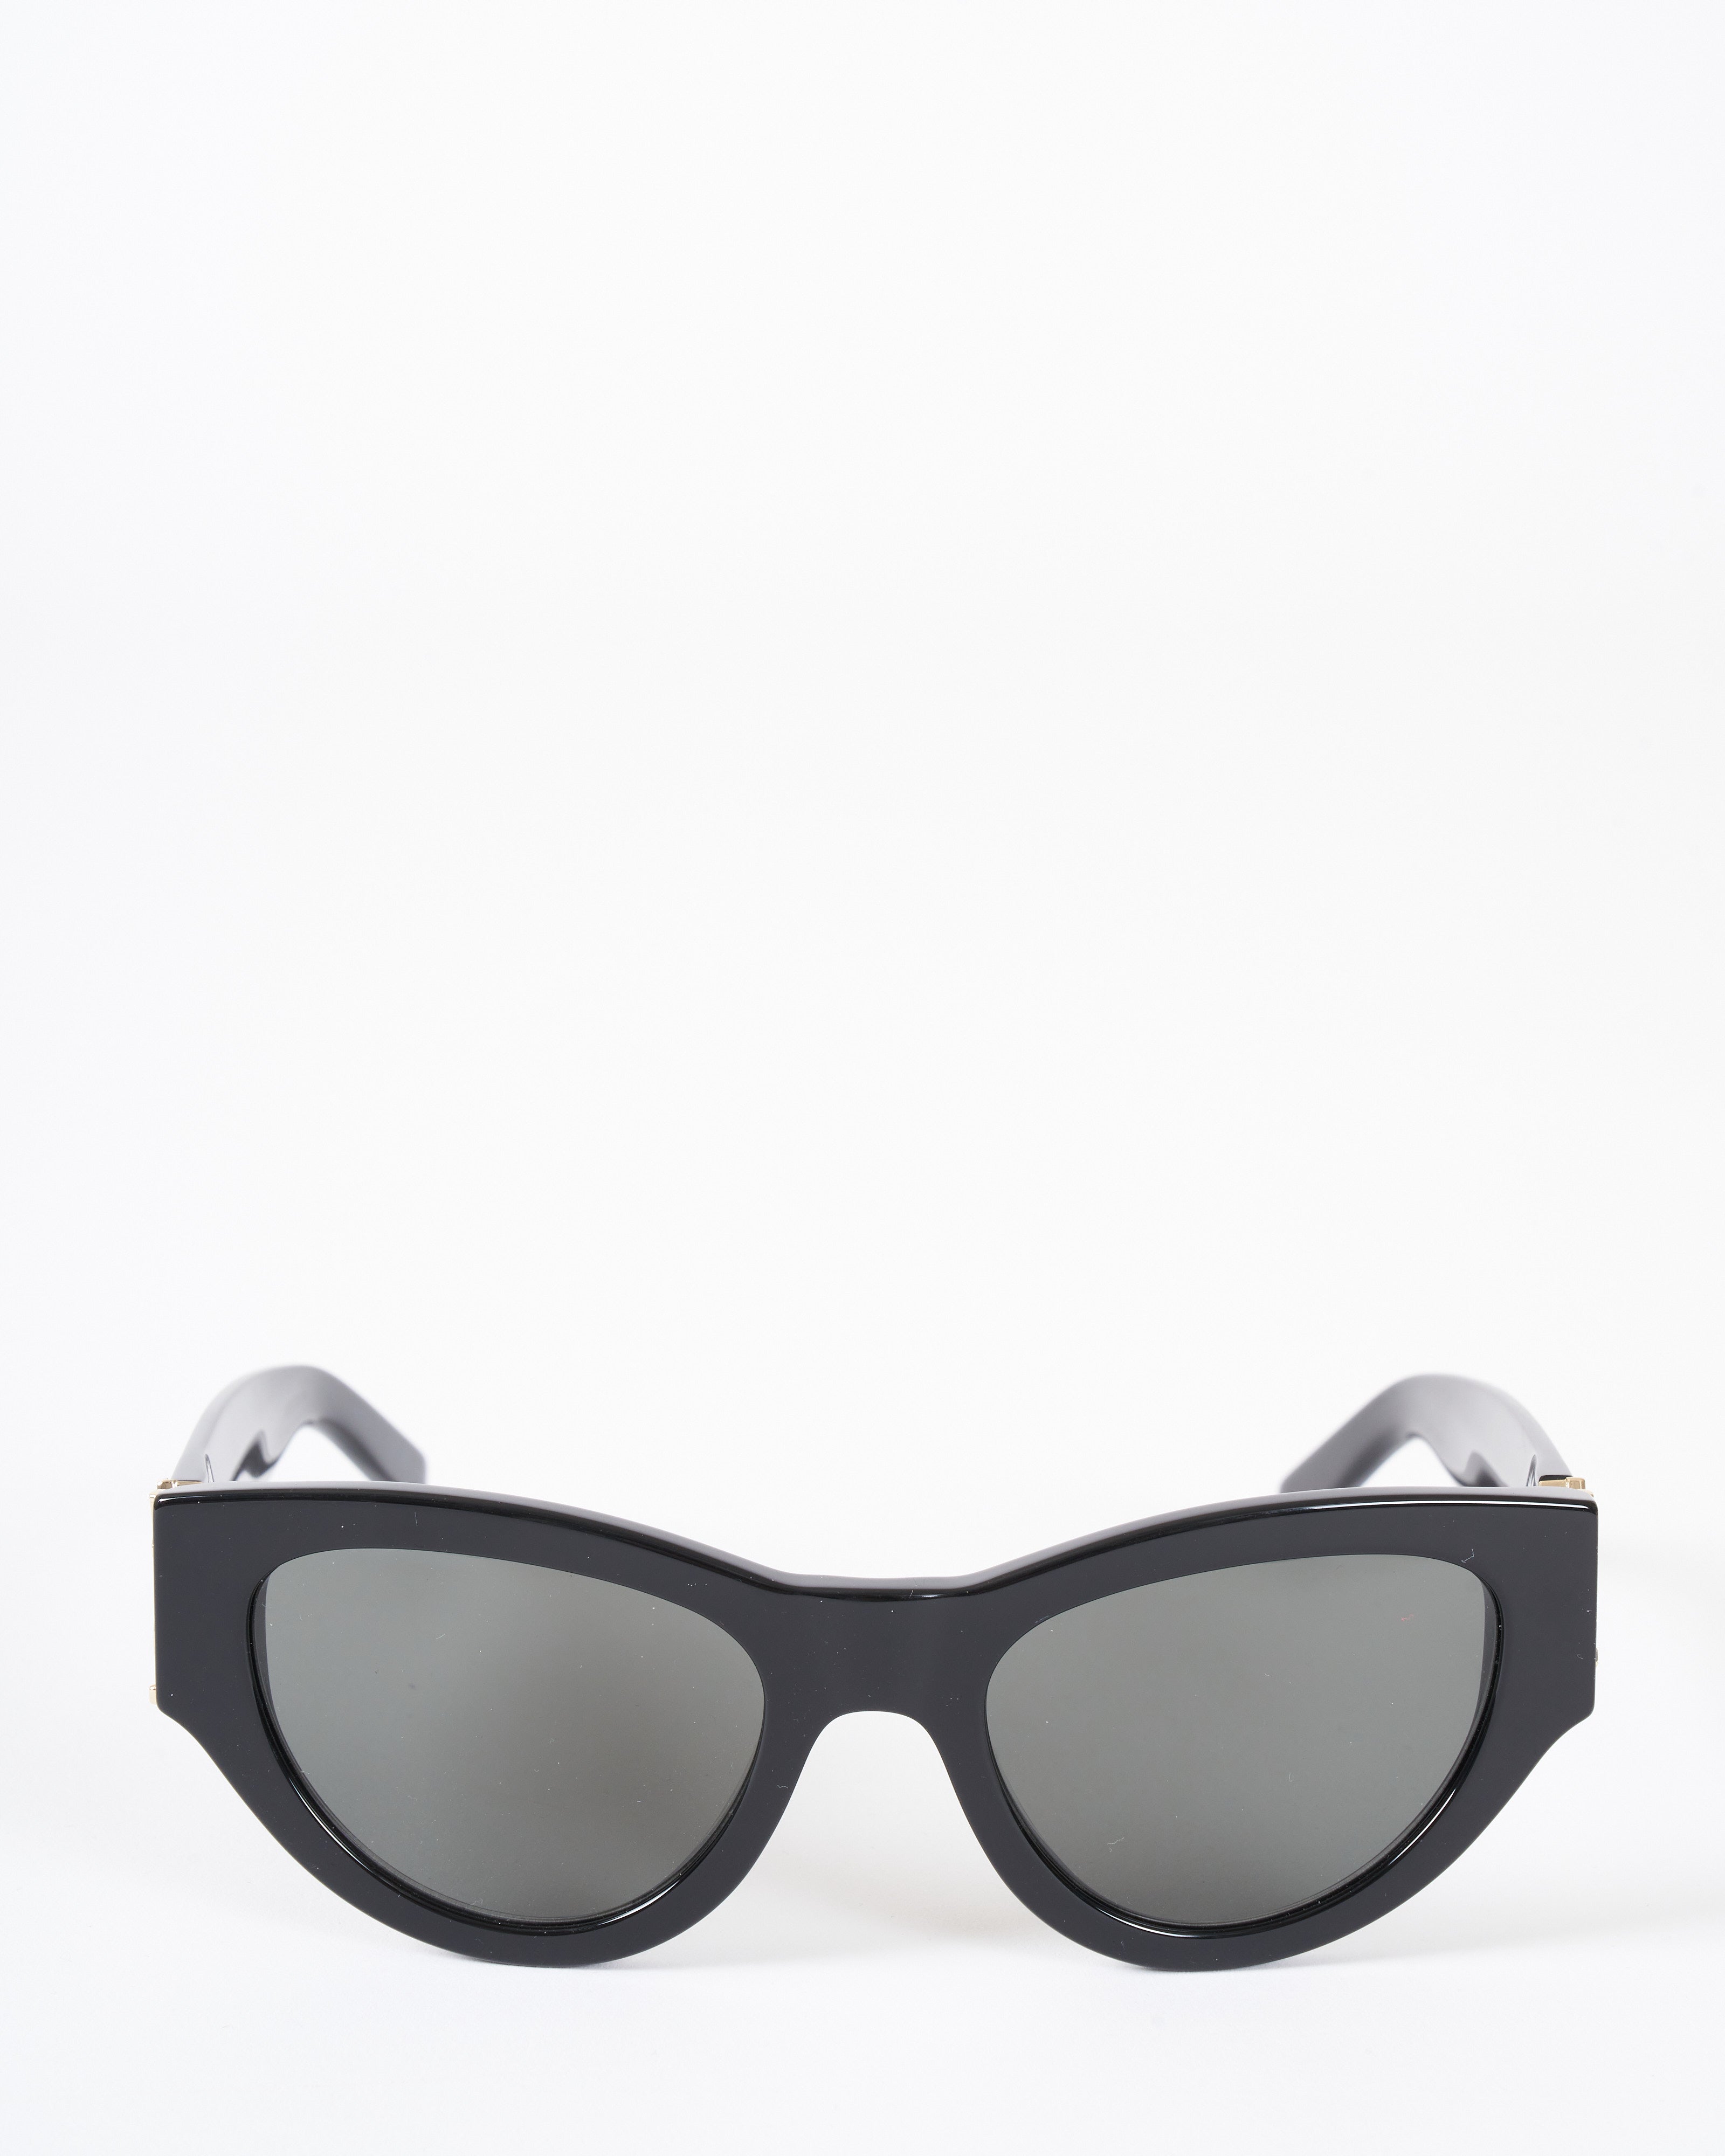 Saint Laurent SL M94 Sunglasses